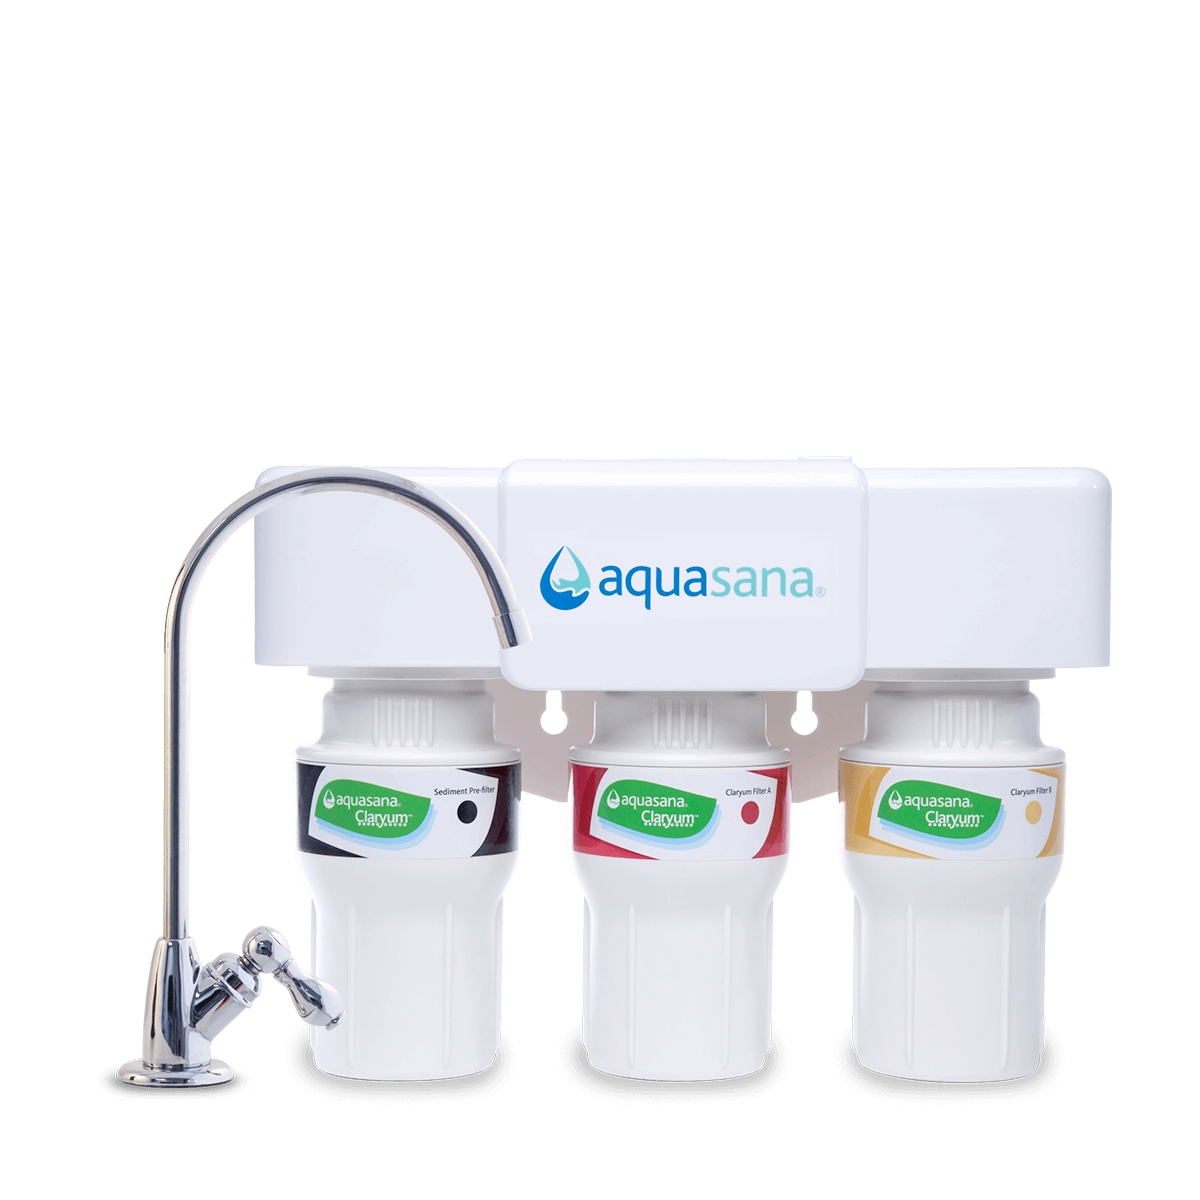 Aquasana 3-Stage Under Sink Water Filter, Chrome, 1/2 Year/600 Gallon